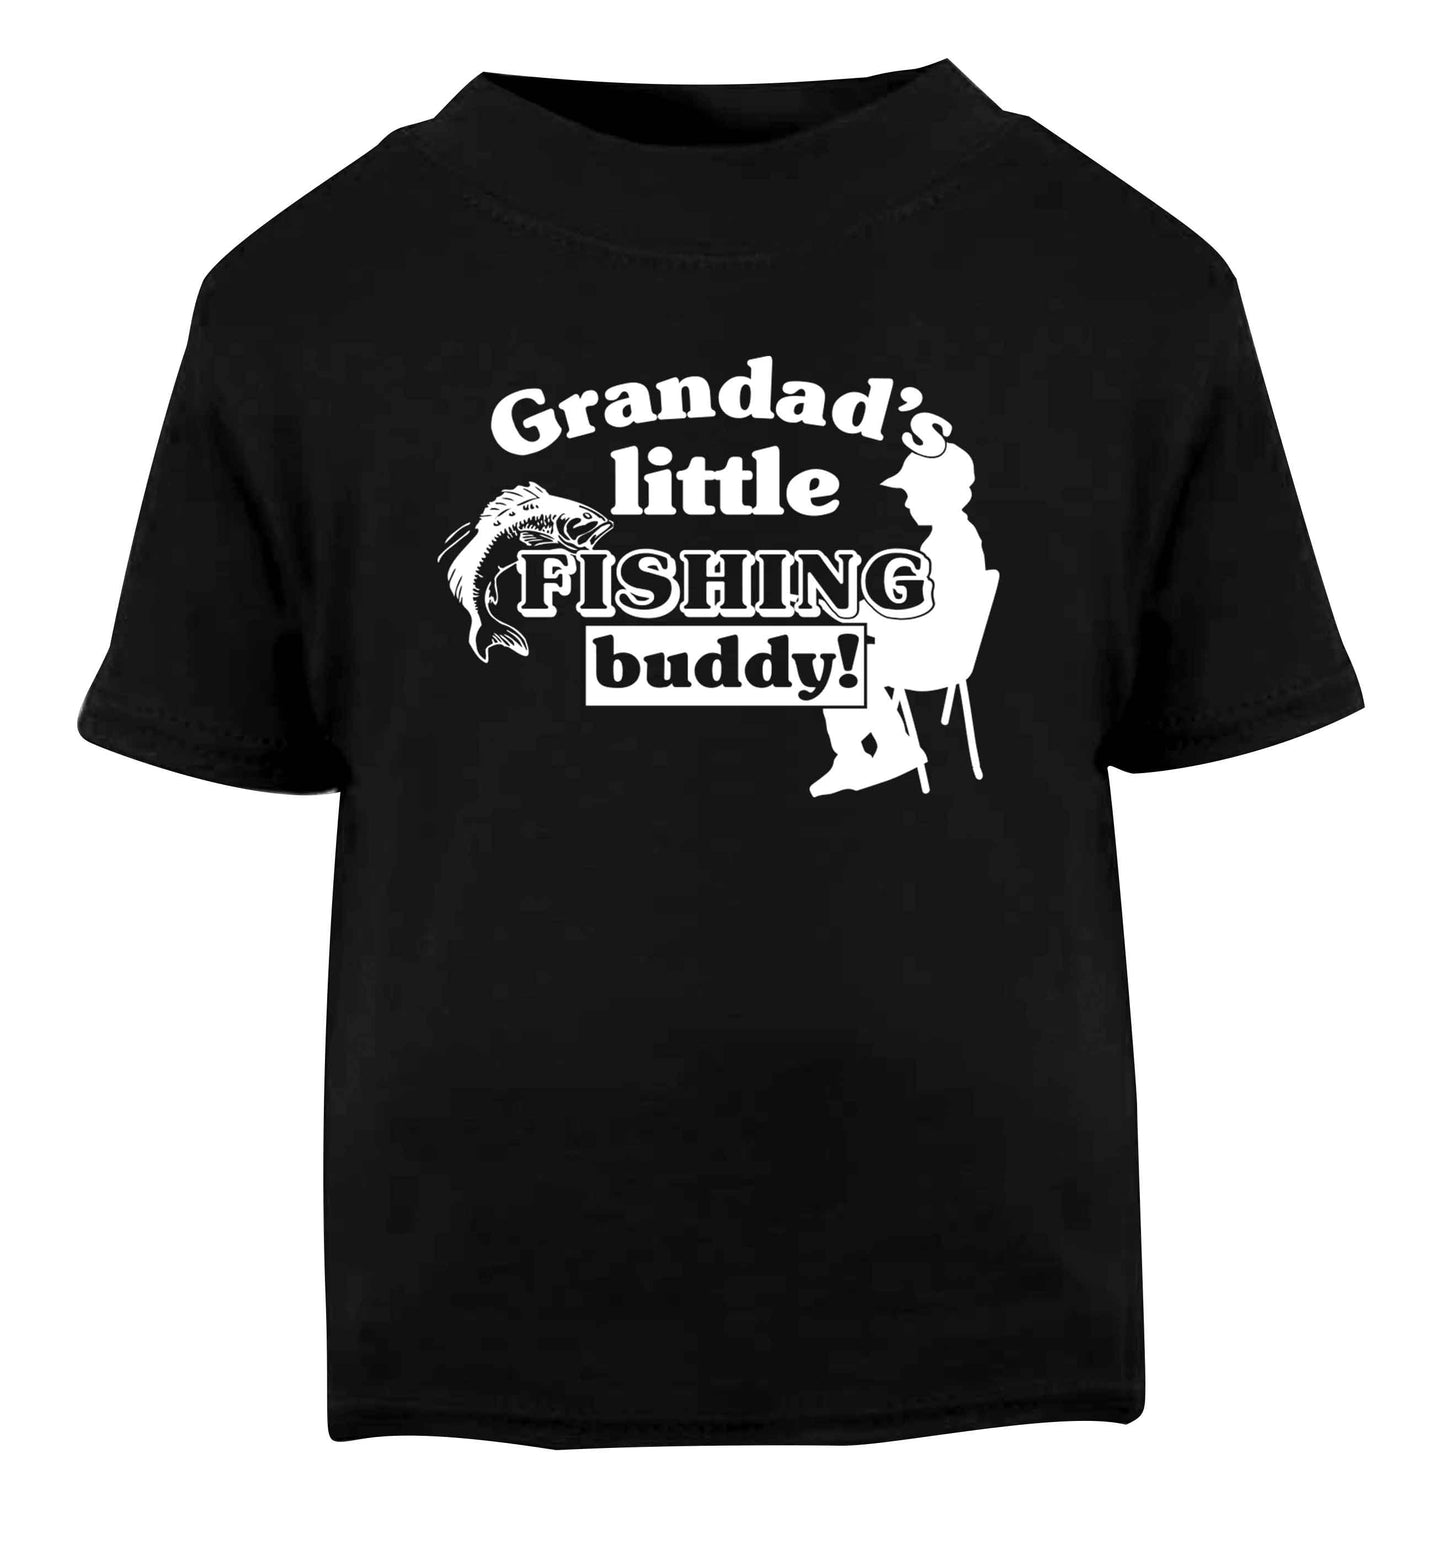 Grandad's little fishing buddy! Black Baby Toddler Tshirt 2 years